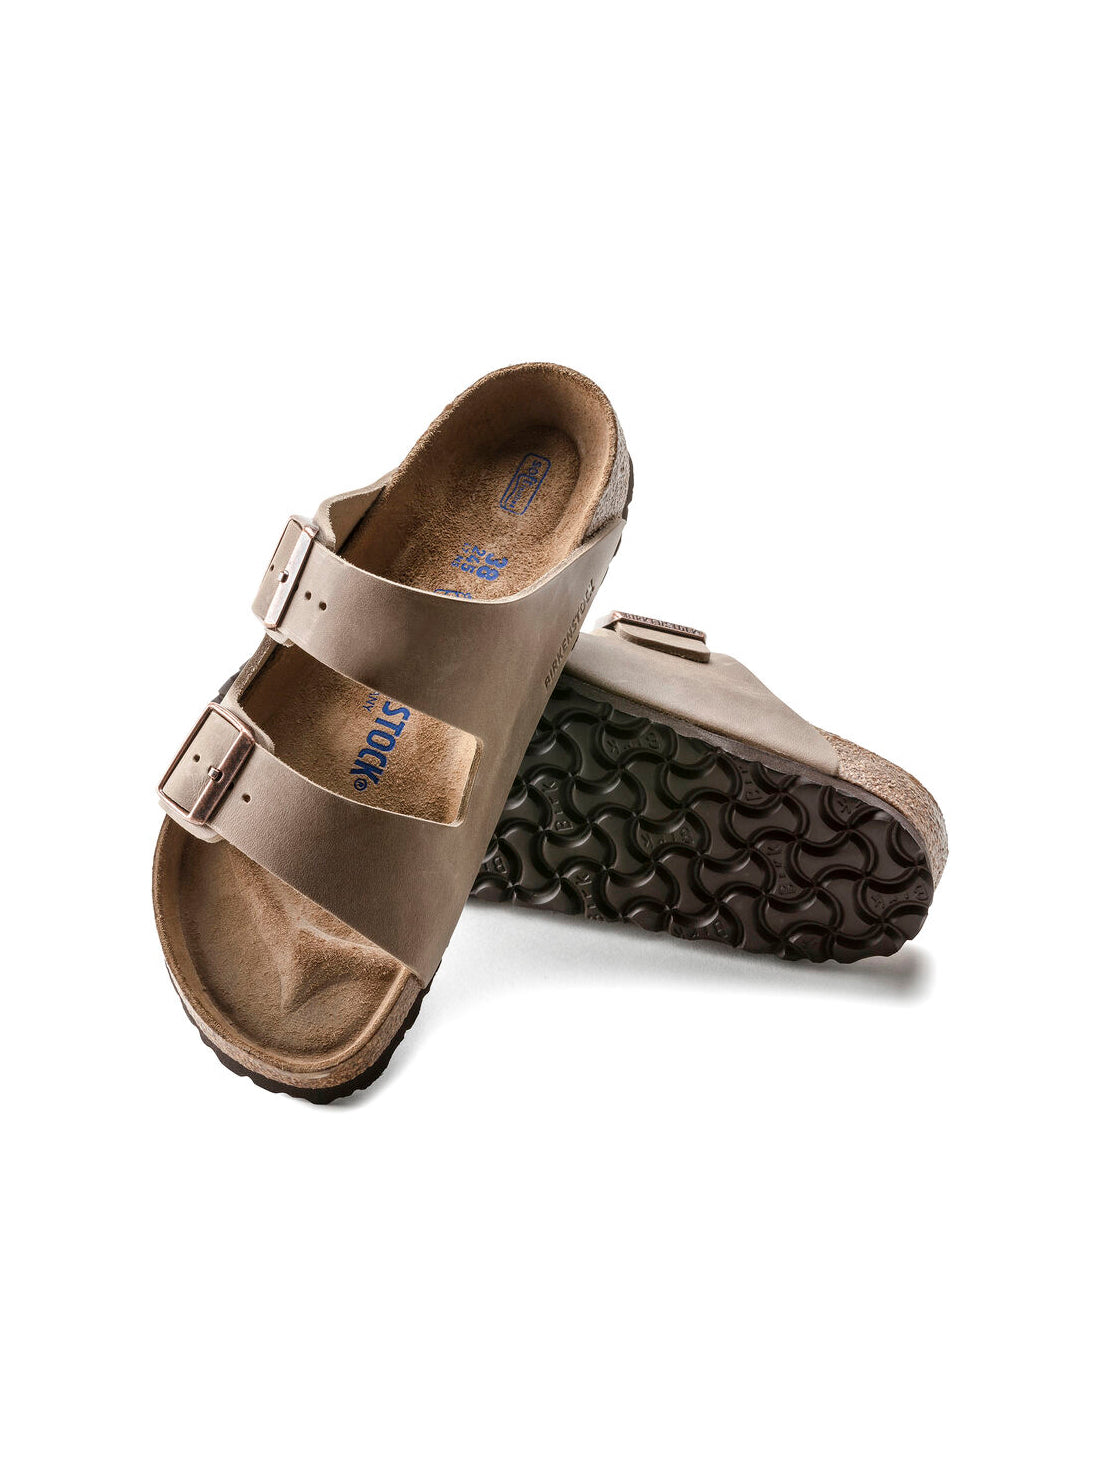 birkenstock arizona soft footbed sandals in oiled leather tobacco brown regular